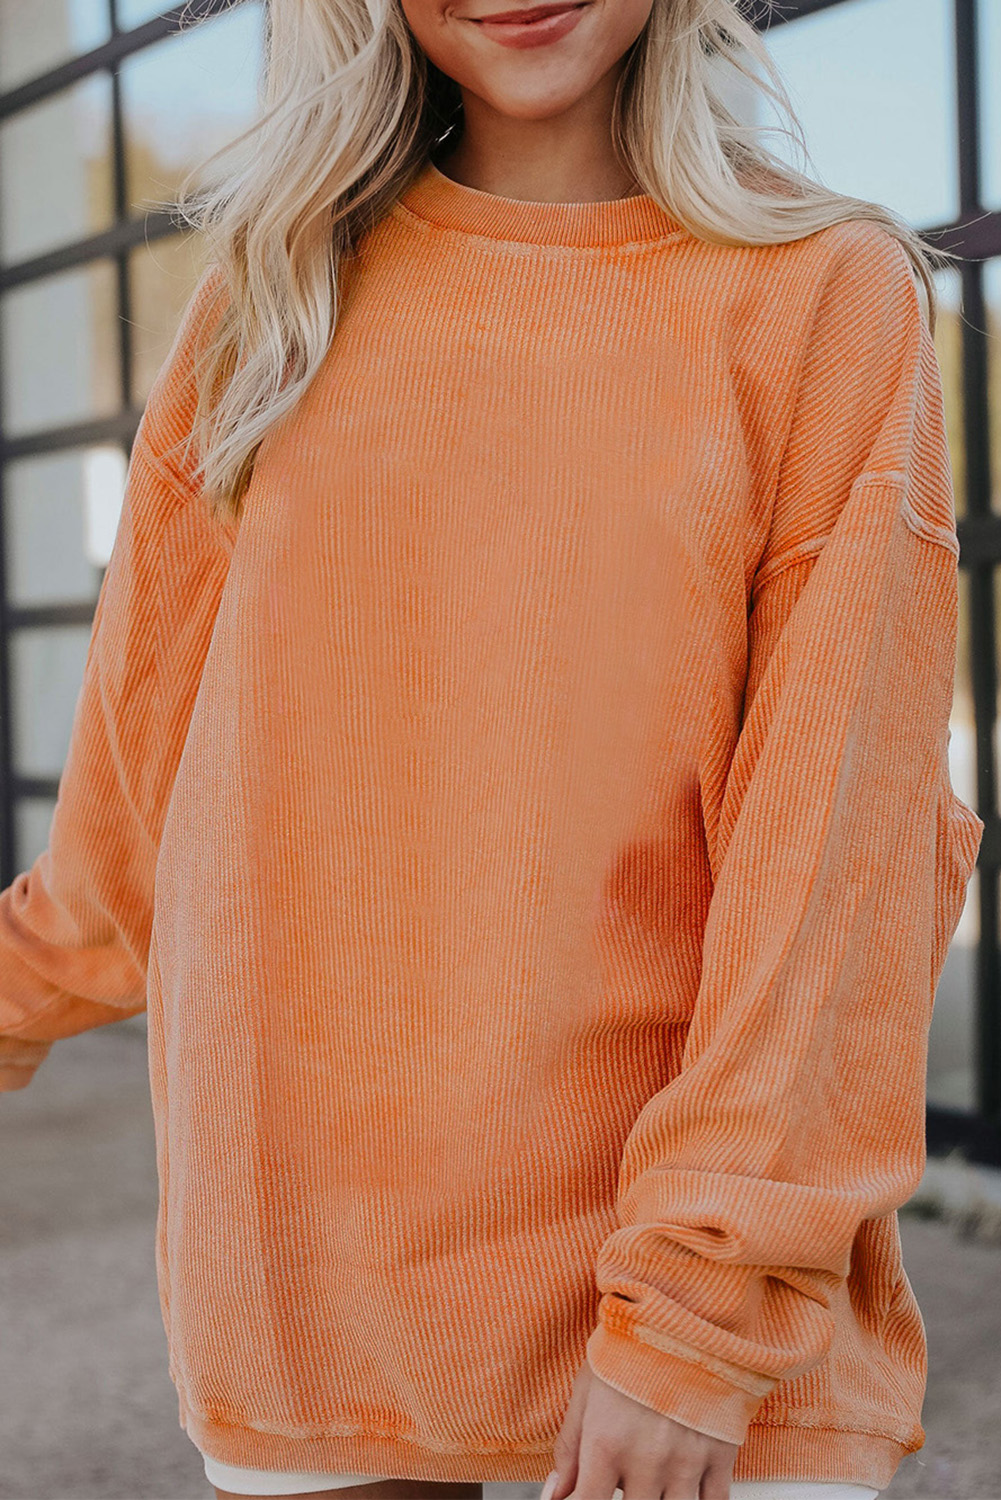 Shewin Wholesale Chic Female Orange Plain Drop Sleeve Rib-Knit Oversized Sweatshirt